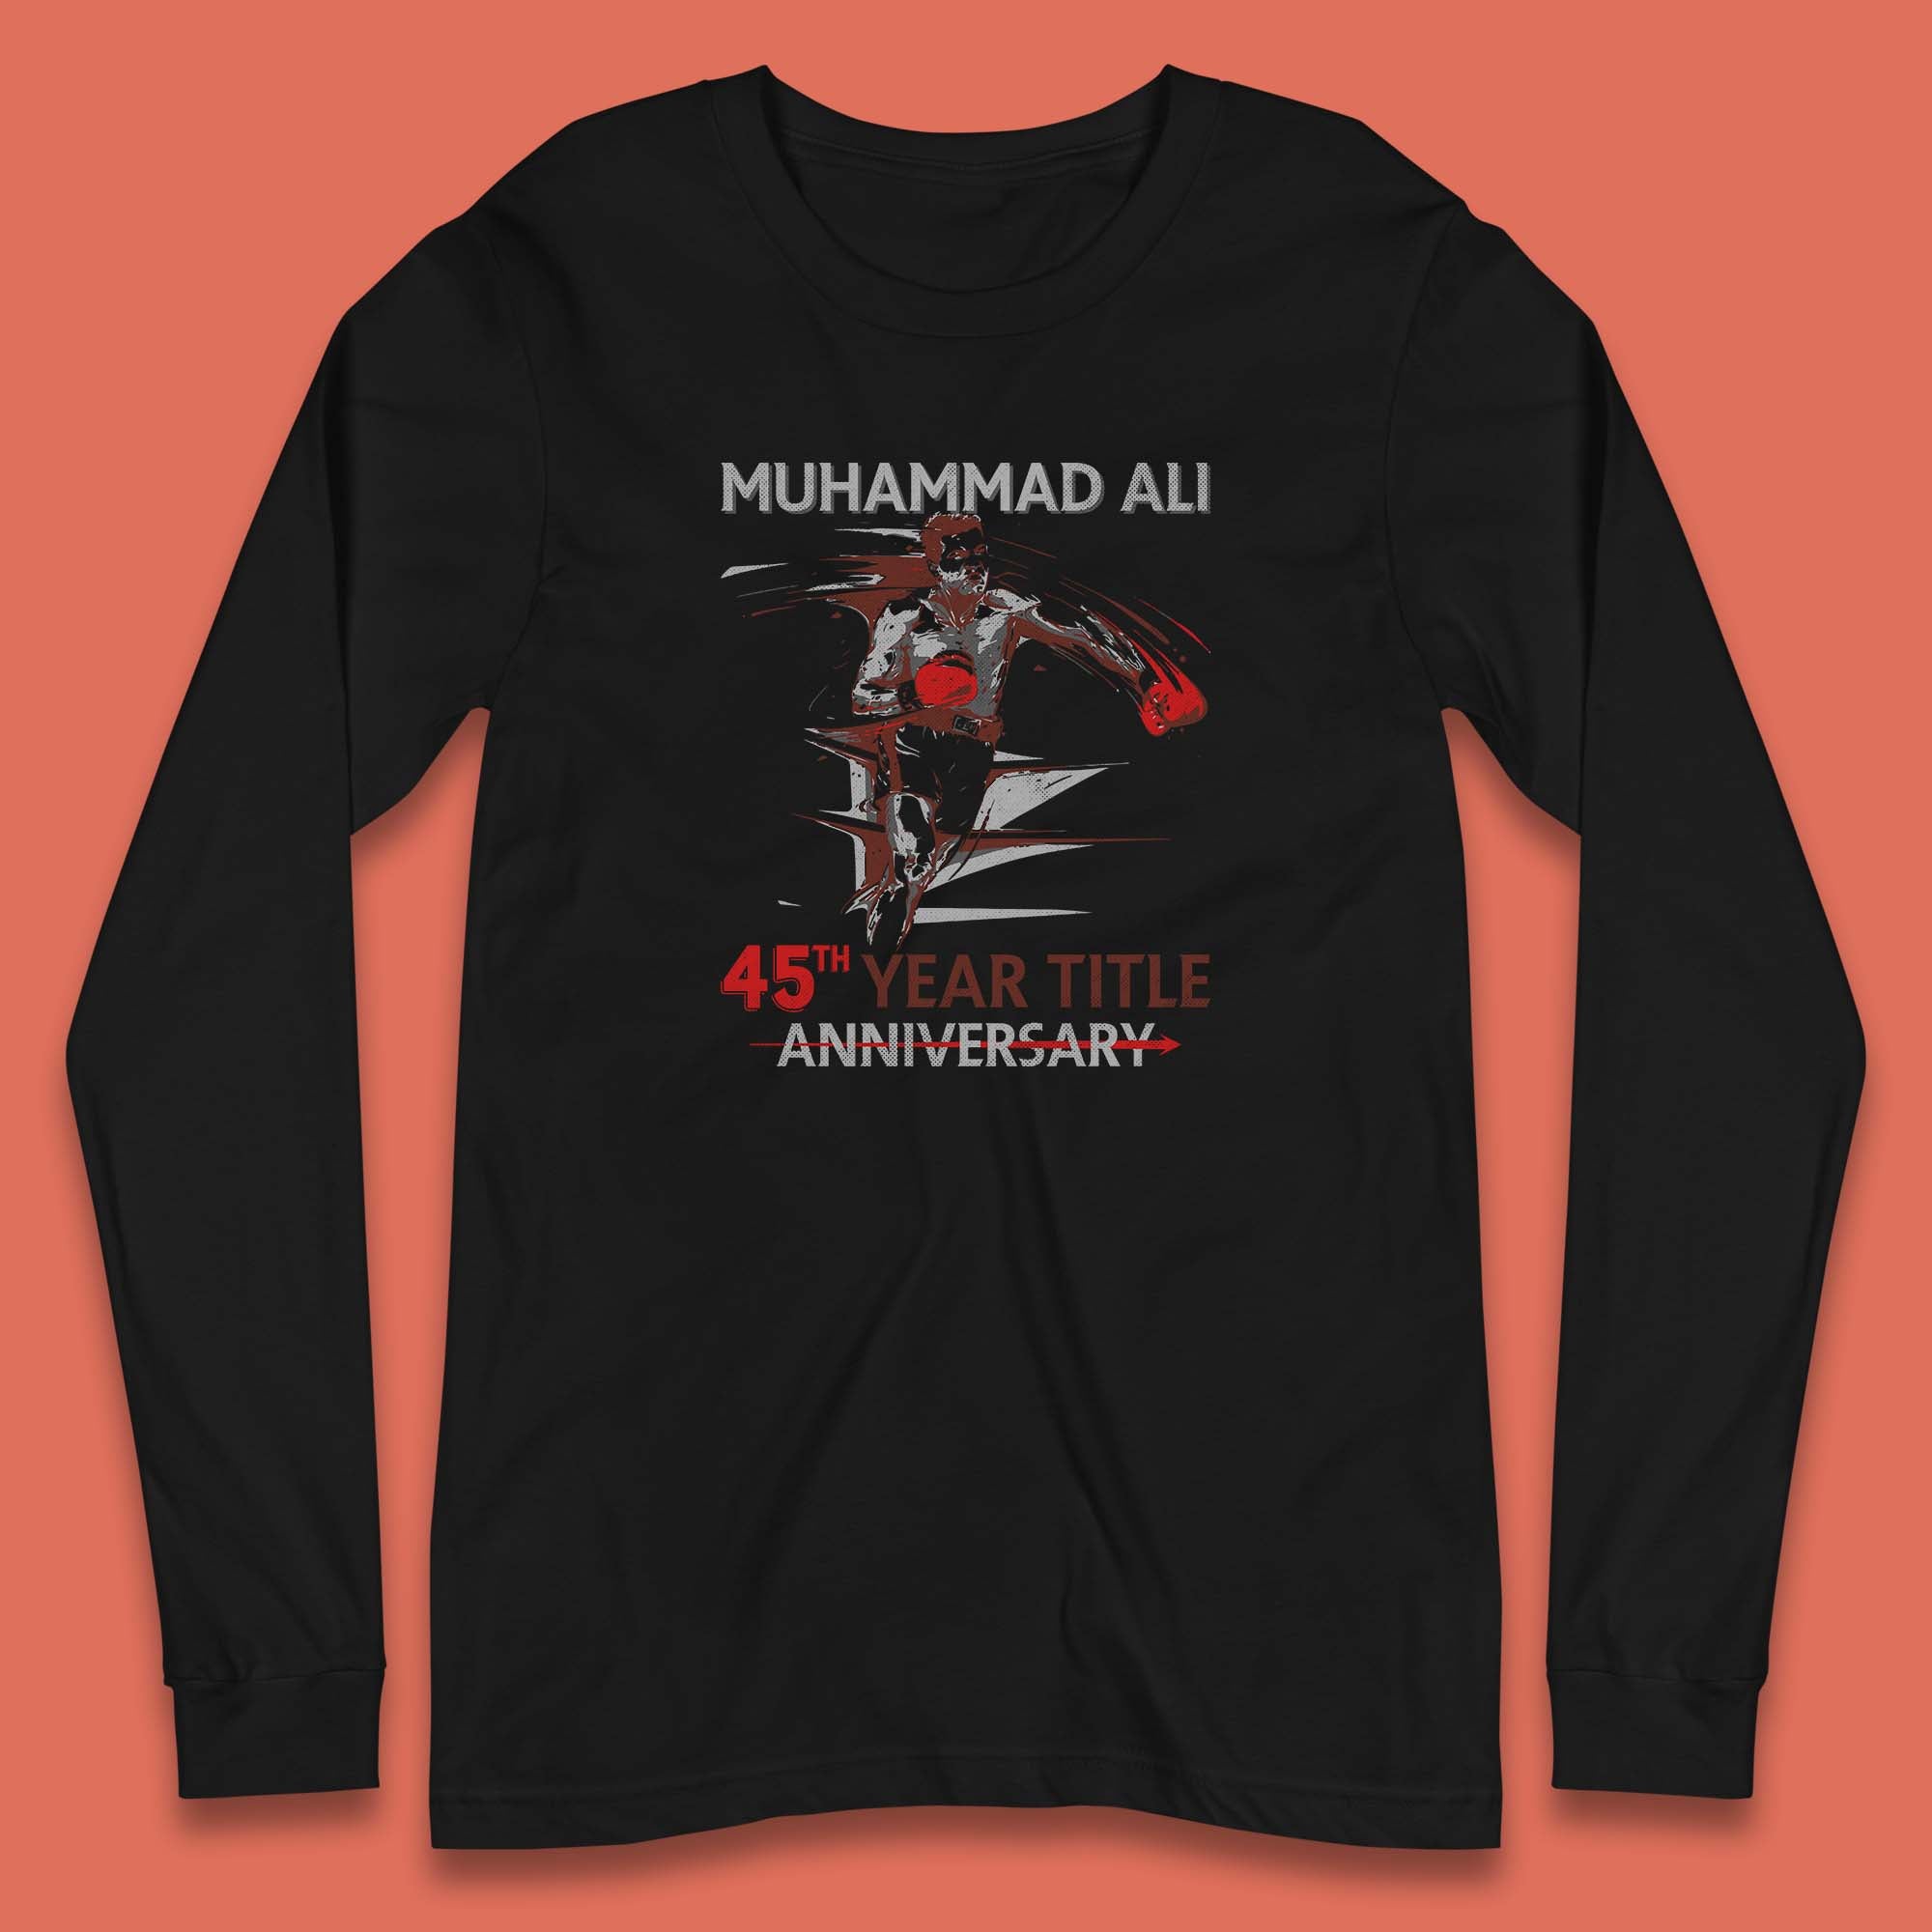 Muhammad Ali 45th Year Title Anniversary World Boxing Champion American Heavyweight Boxer Long Sleeve T Shirt